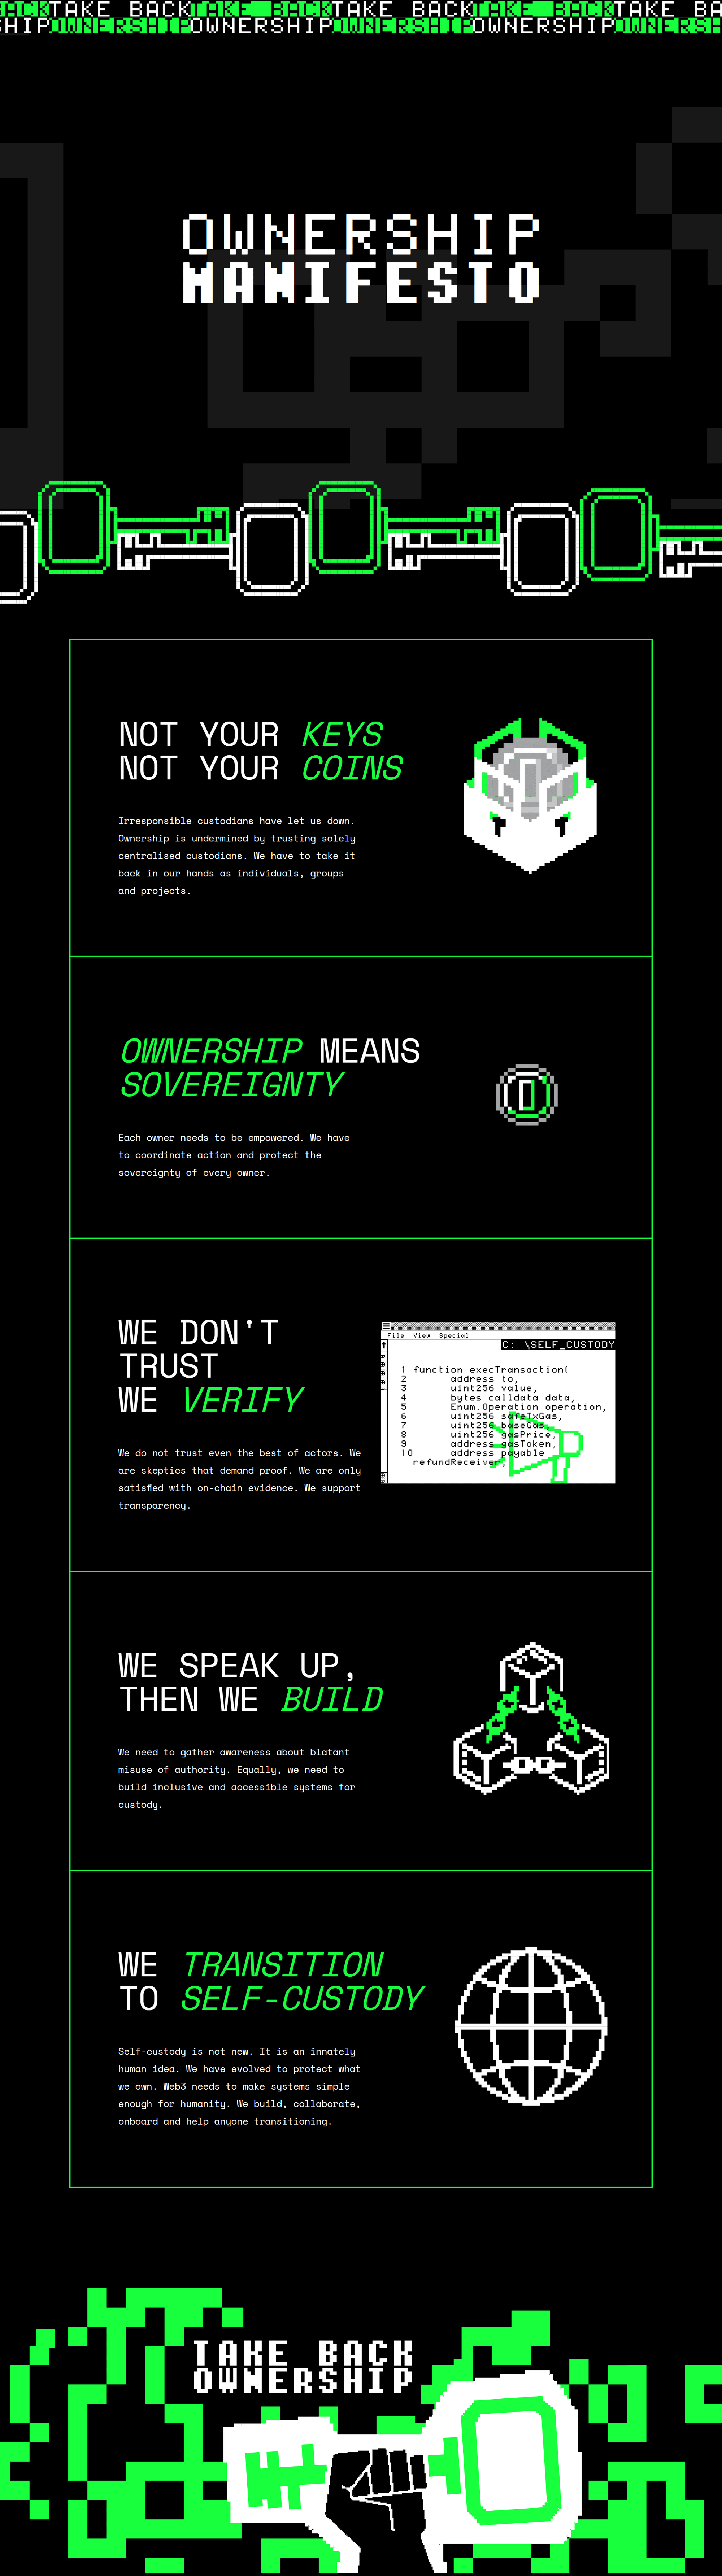 The Ownership Manifesto infographic